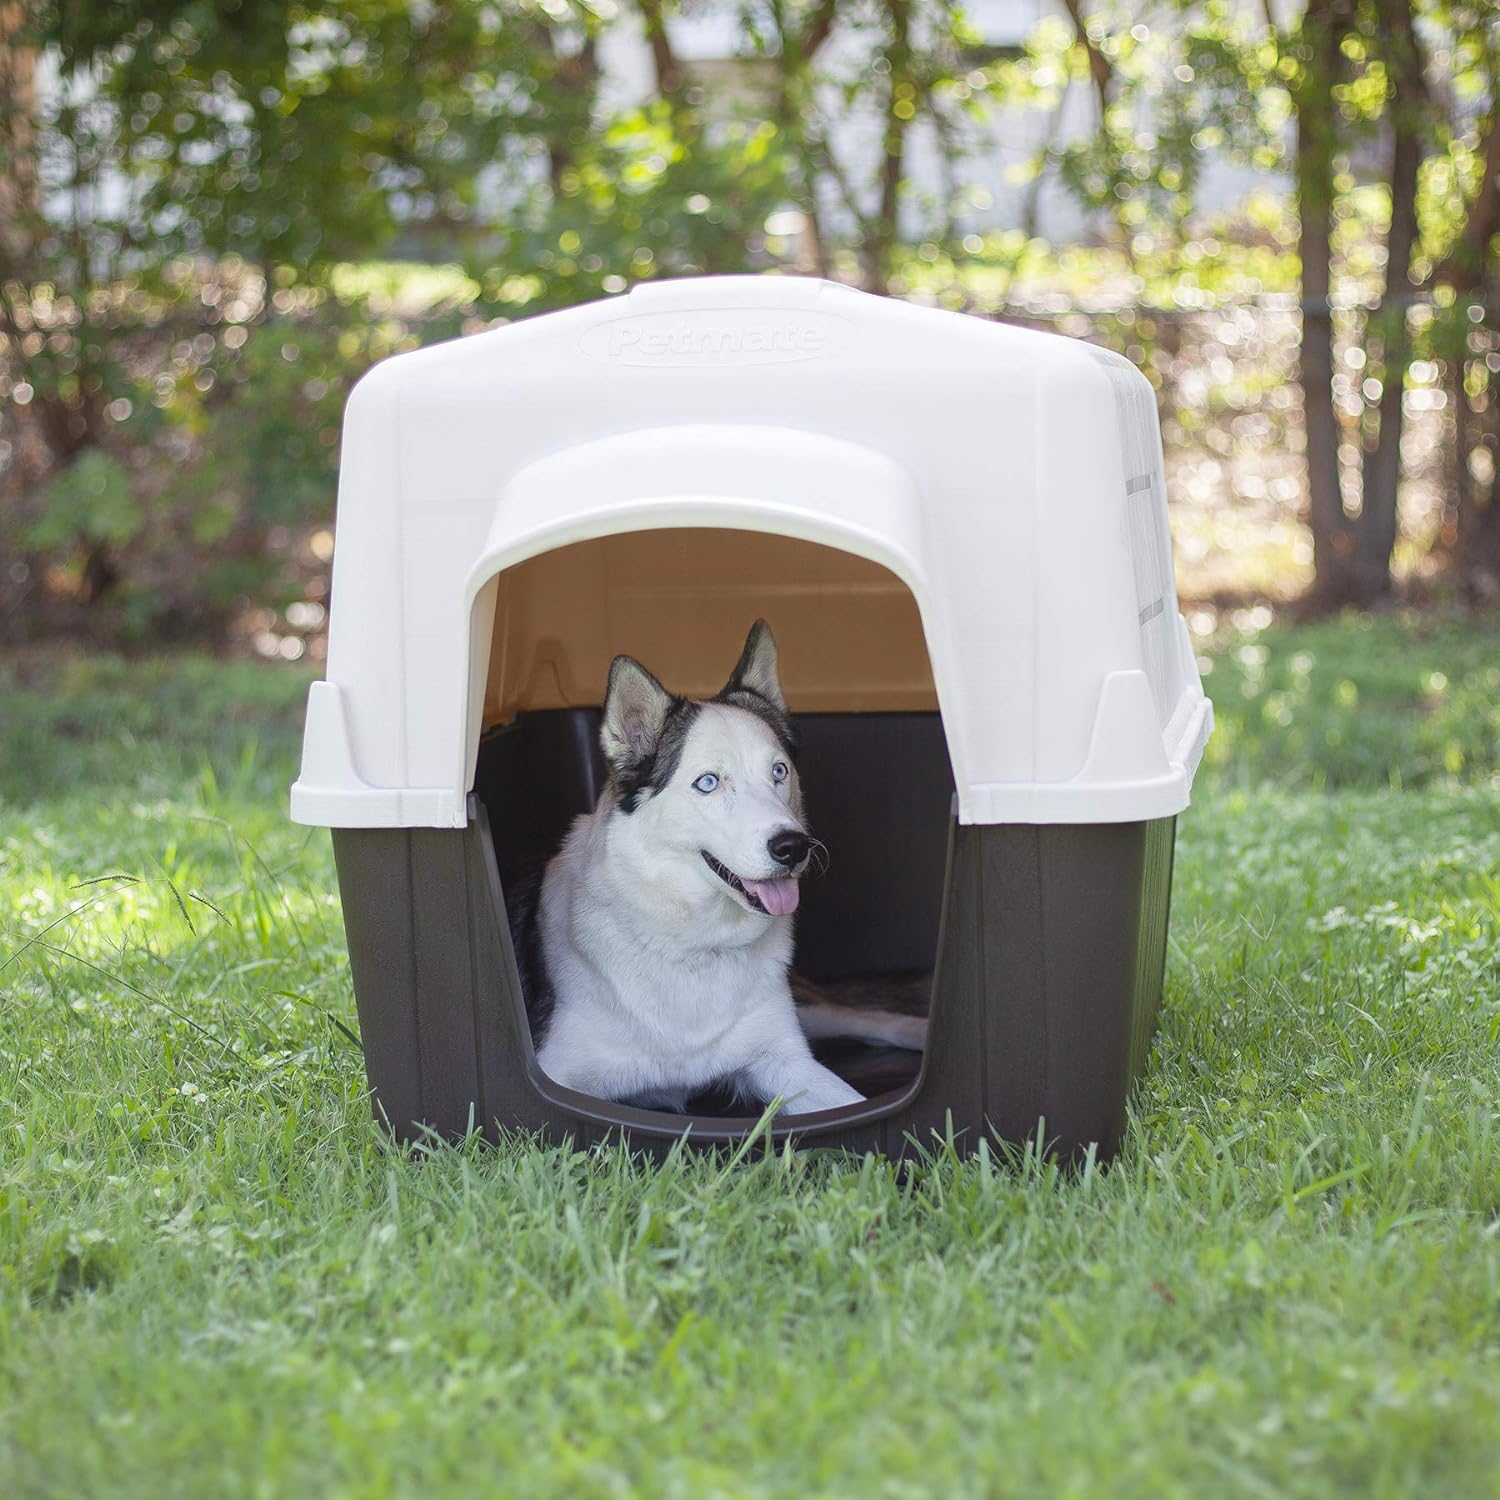 Petmate Aspen Pet Outdoor Dog House, Medium, For Pets 25 to 50 Pounds